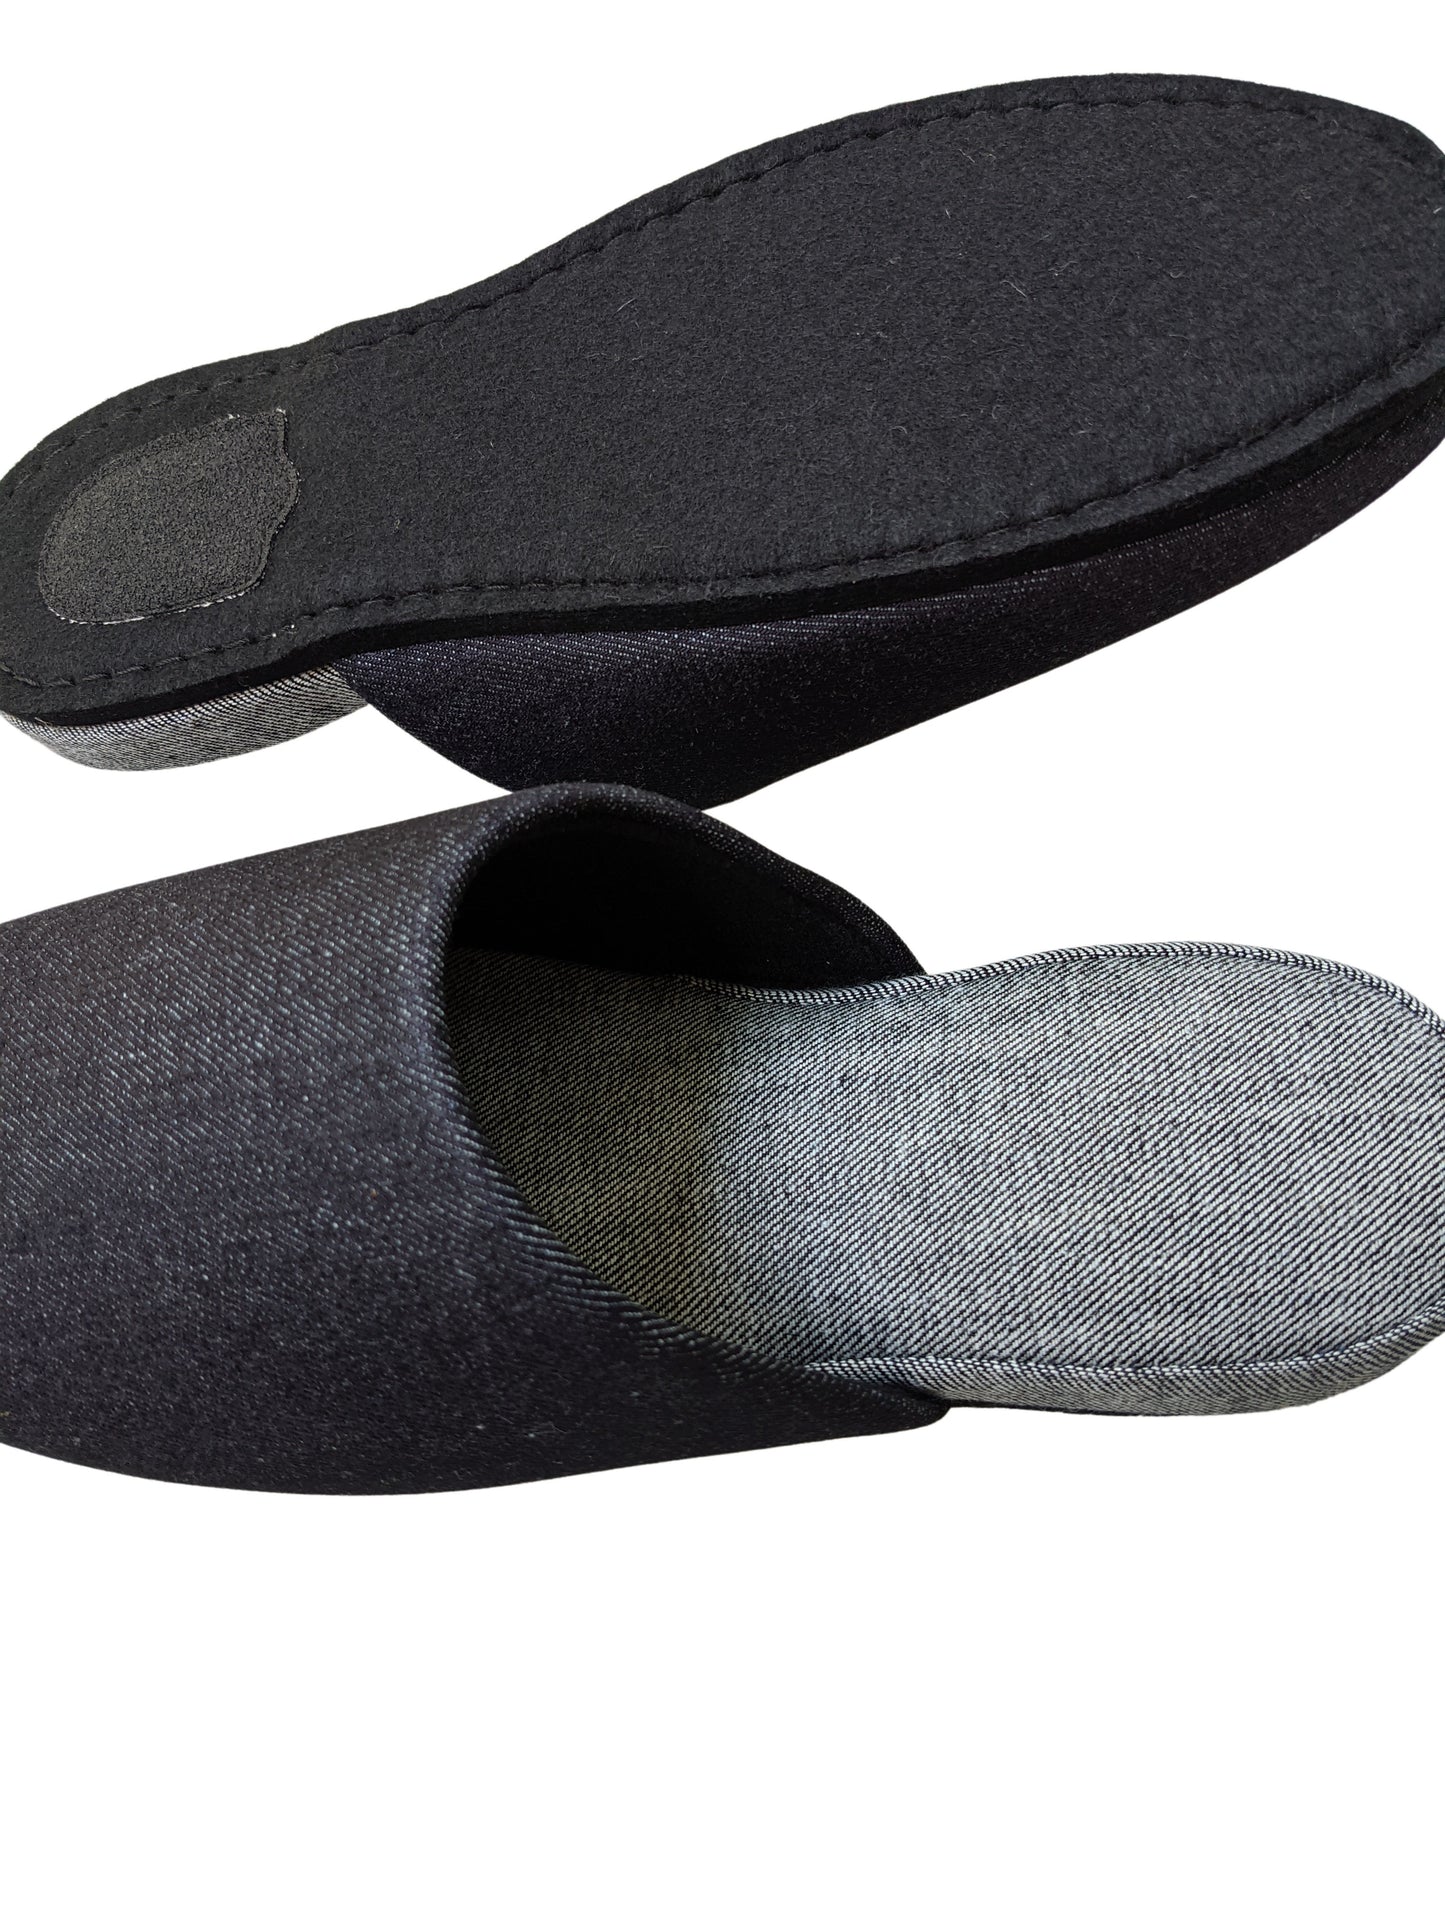 Denim Hiroshima Slippers Simple 4 size [Small / Medium / Large / XL]